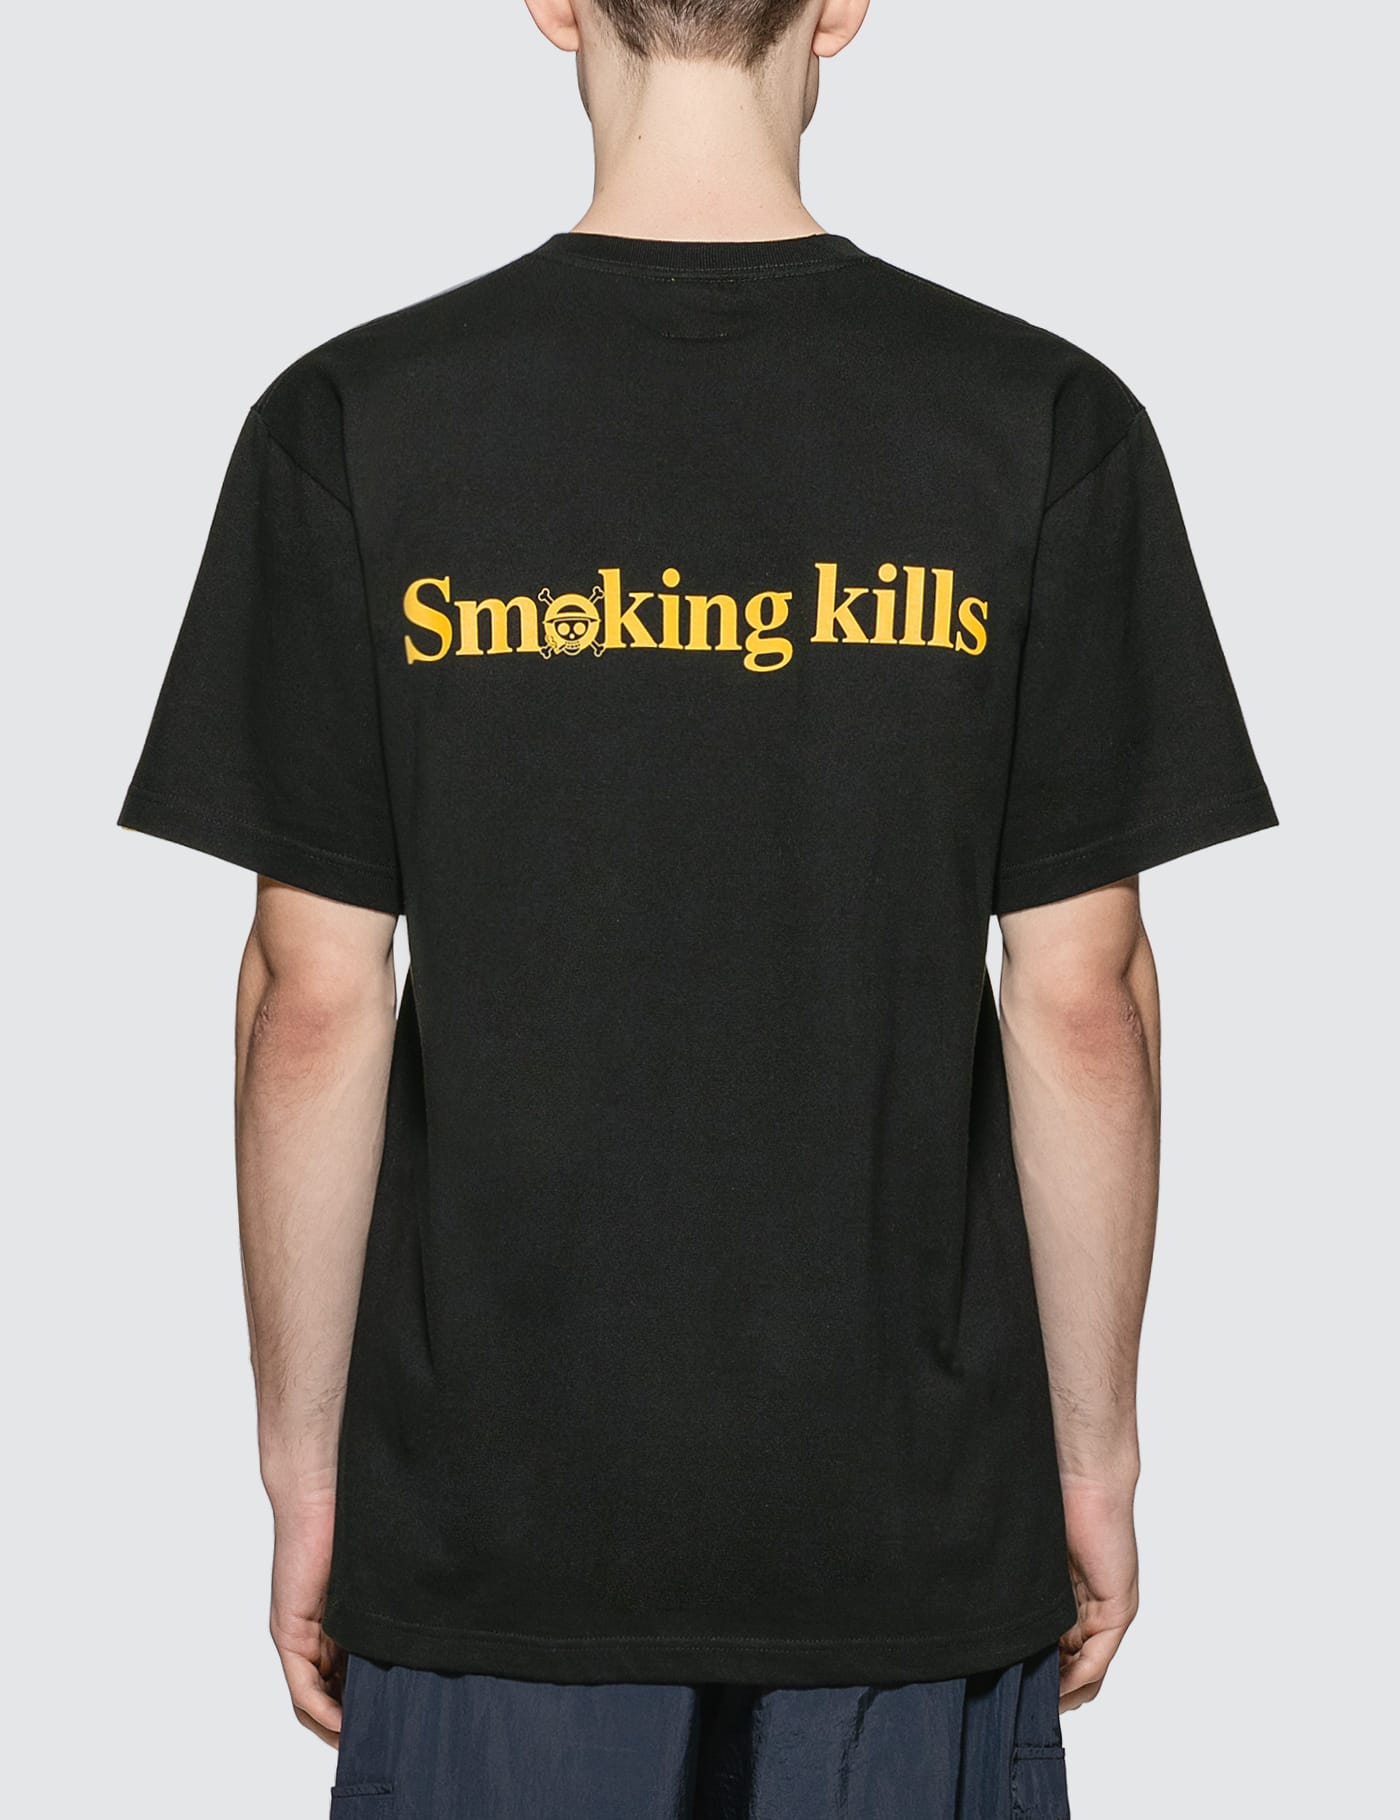 #FR2 X One Piece Sanji Smokers T-shirt